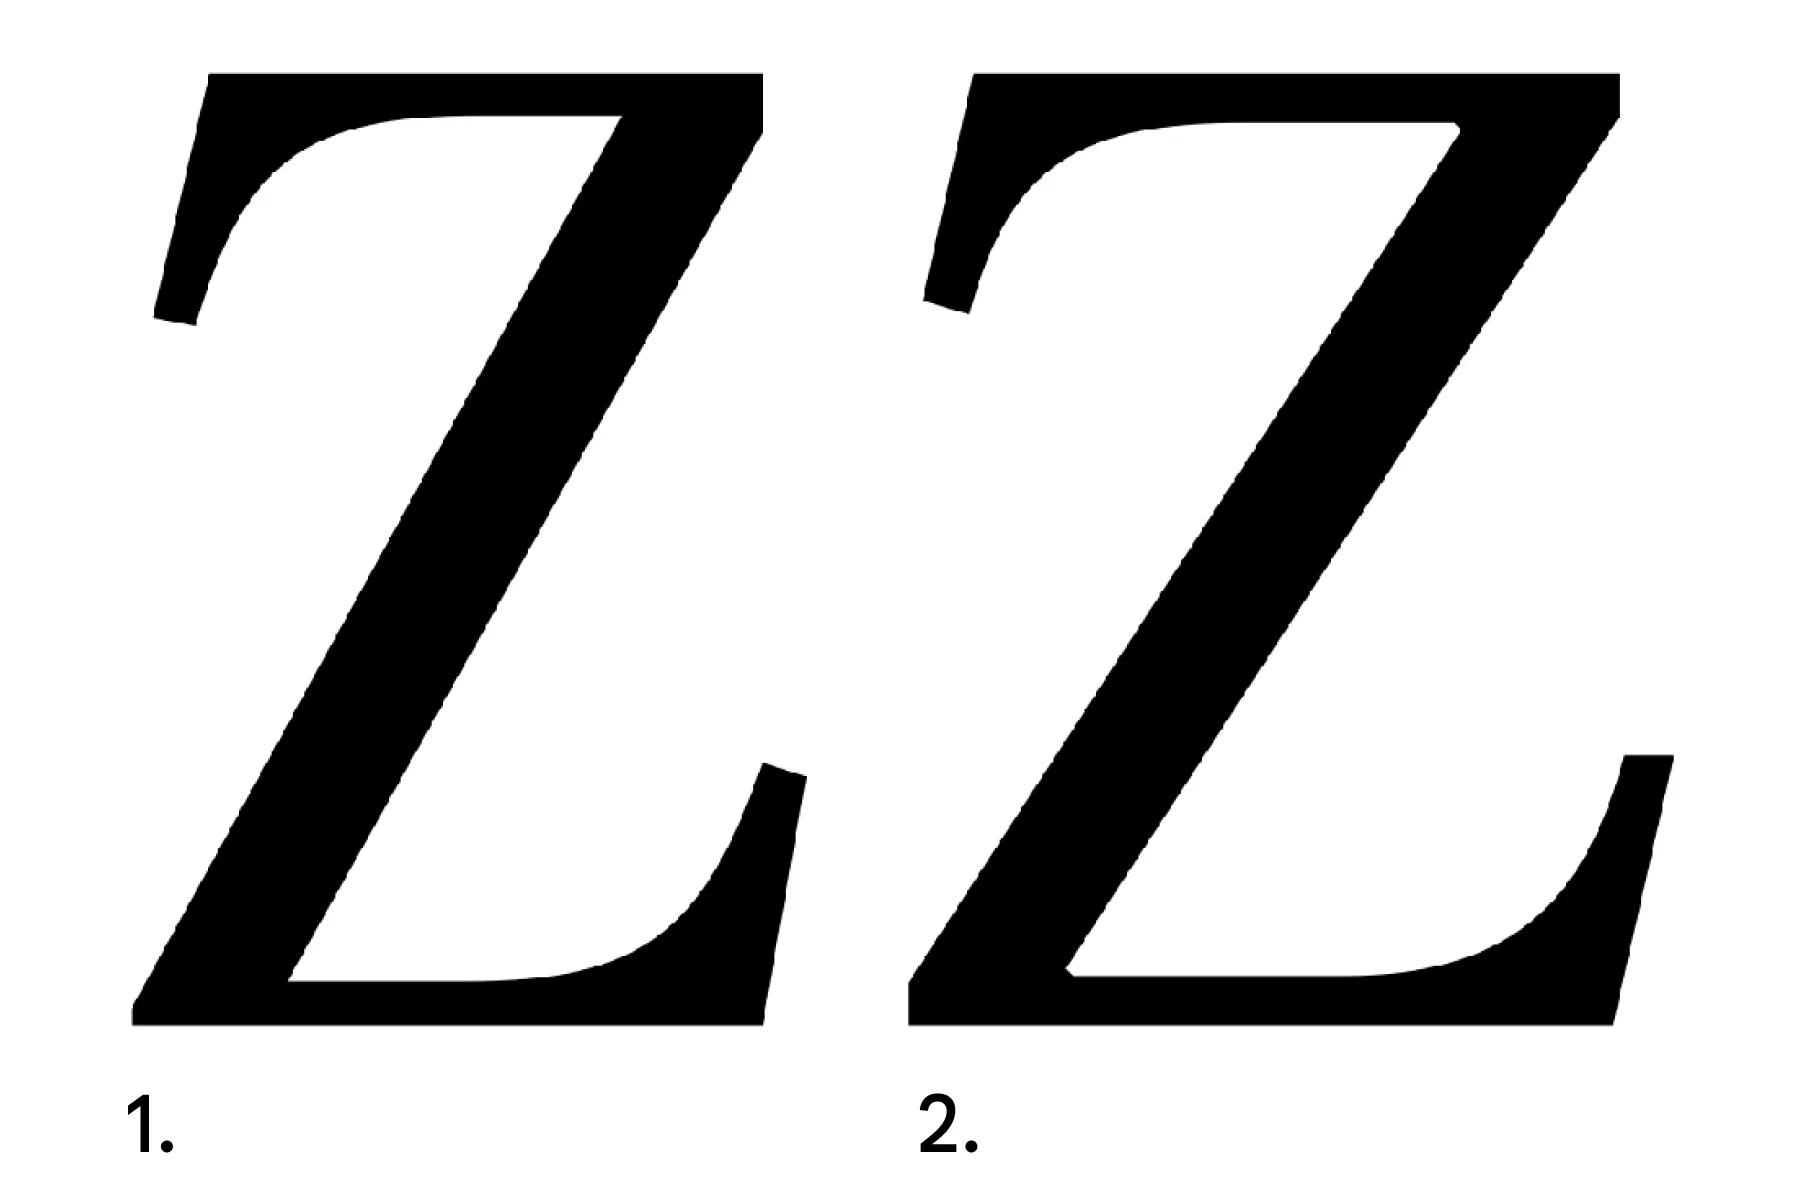 2 uppercase letter “Zs” in black